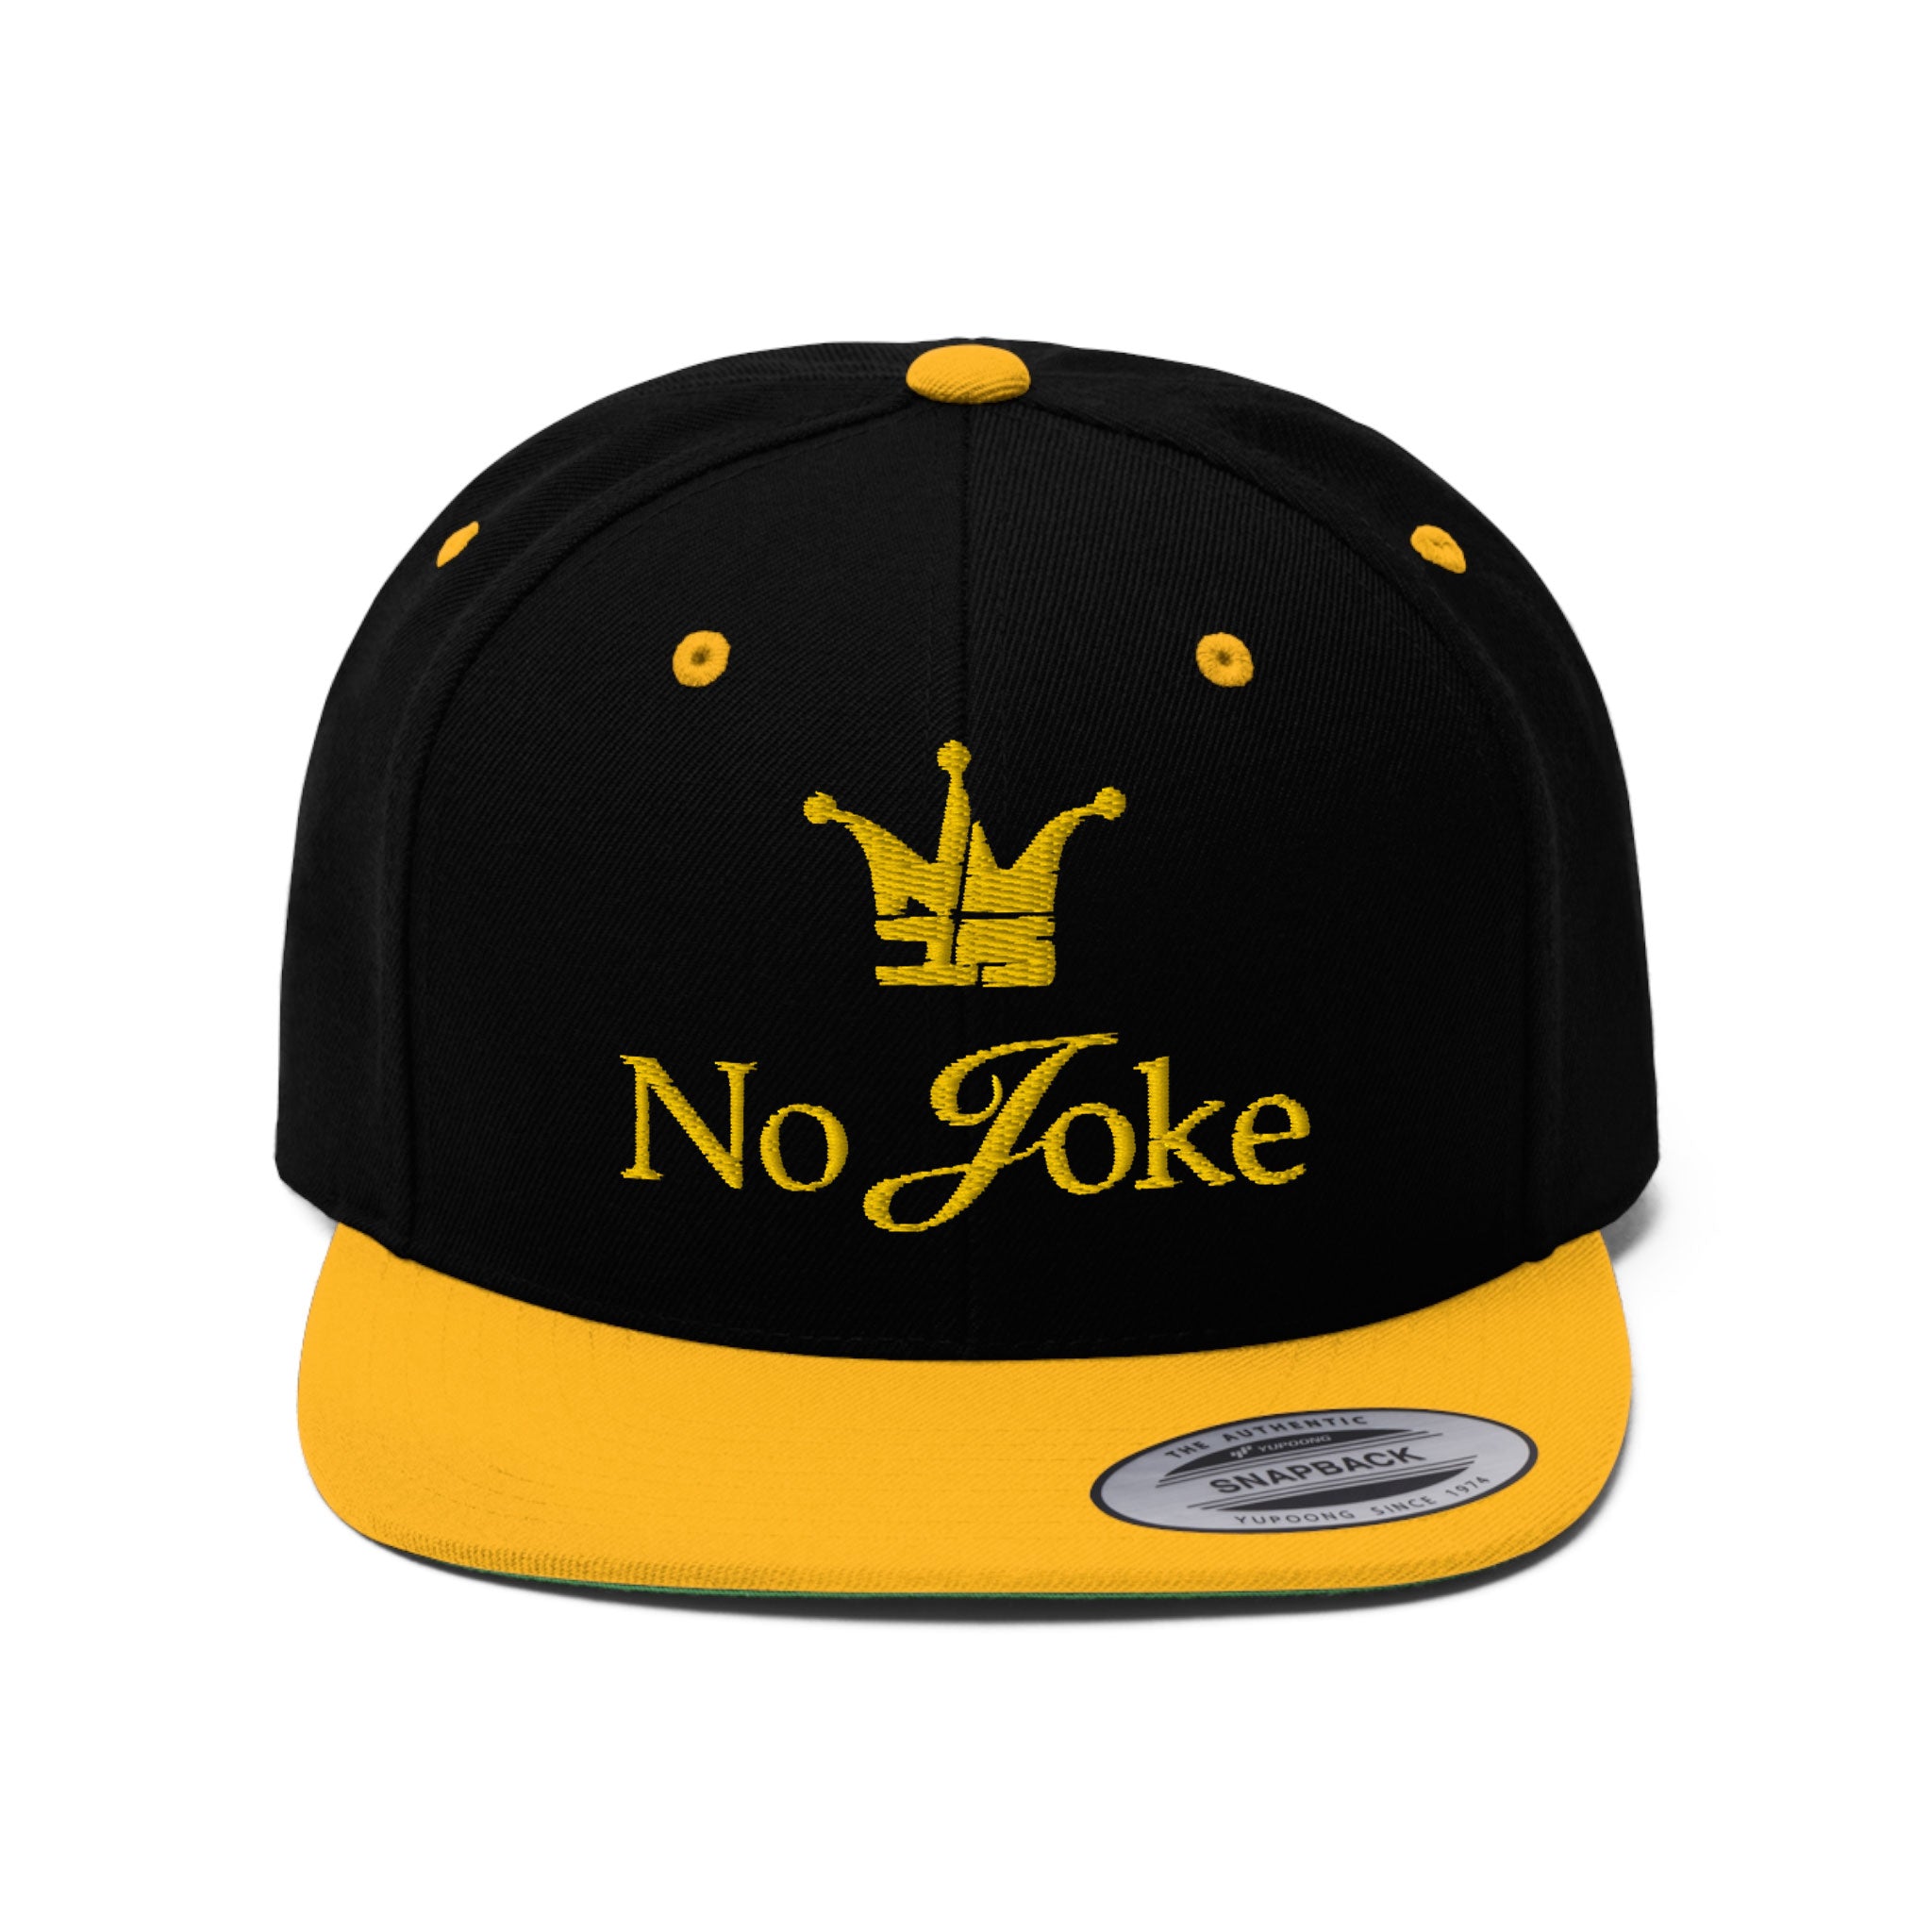 Nikola Jokic Joke No Hat